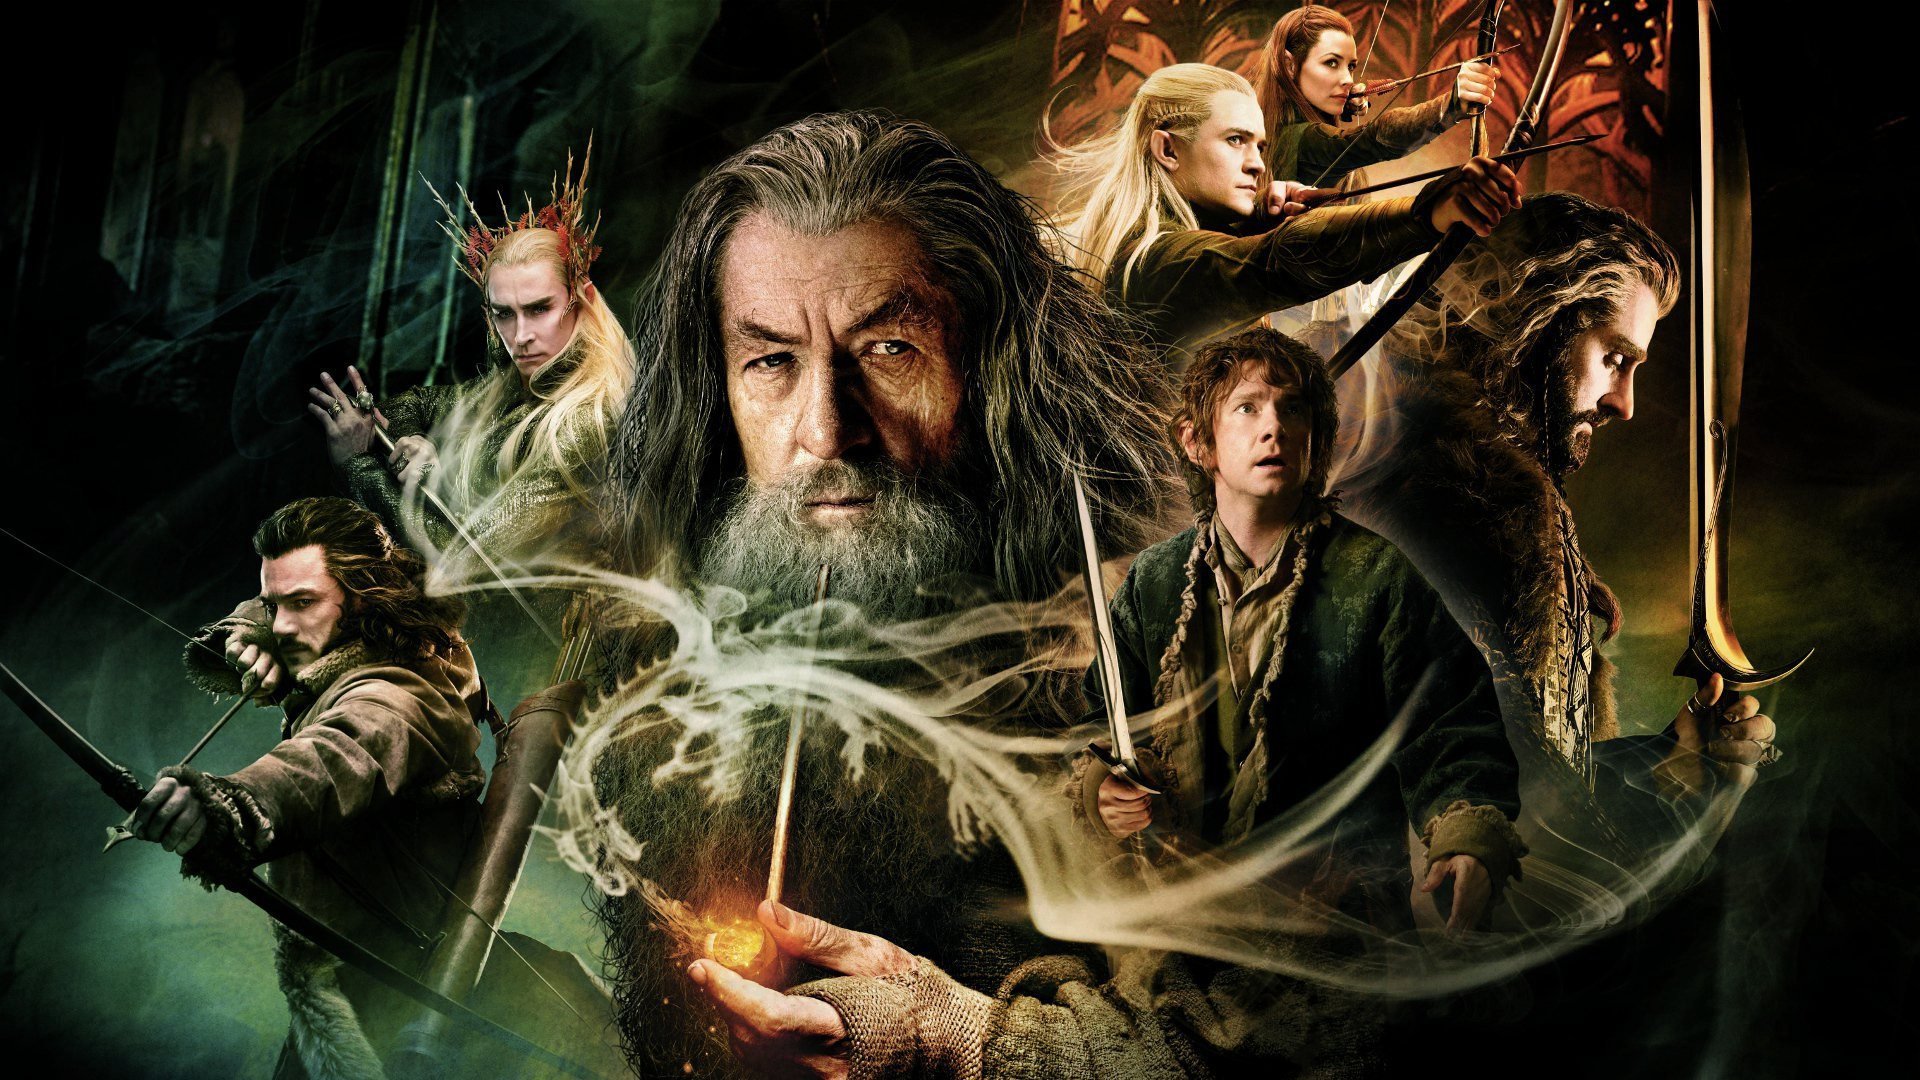 The Hobbit: The Battle of Five Armies (Extended Cut) - Movies - Buy/Rent -  Rakuten TV